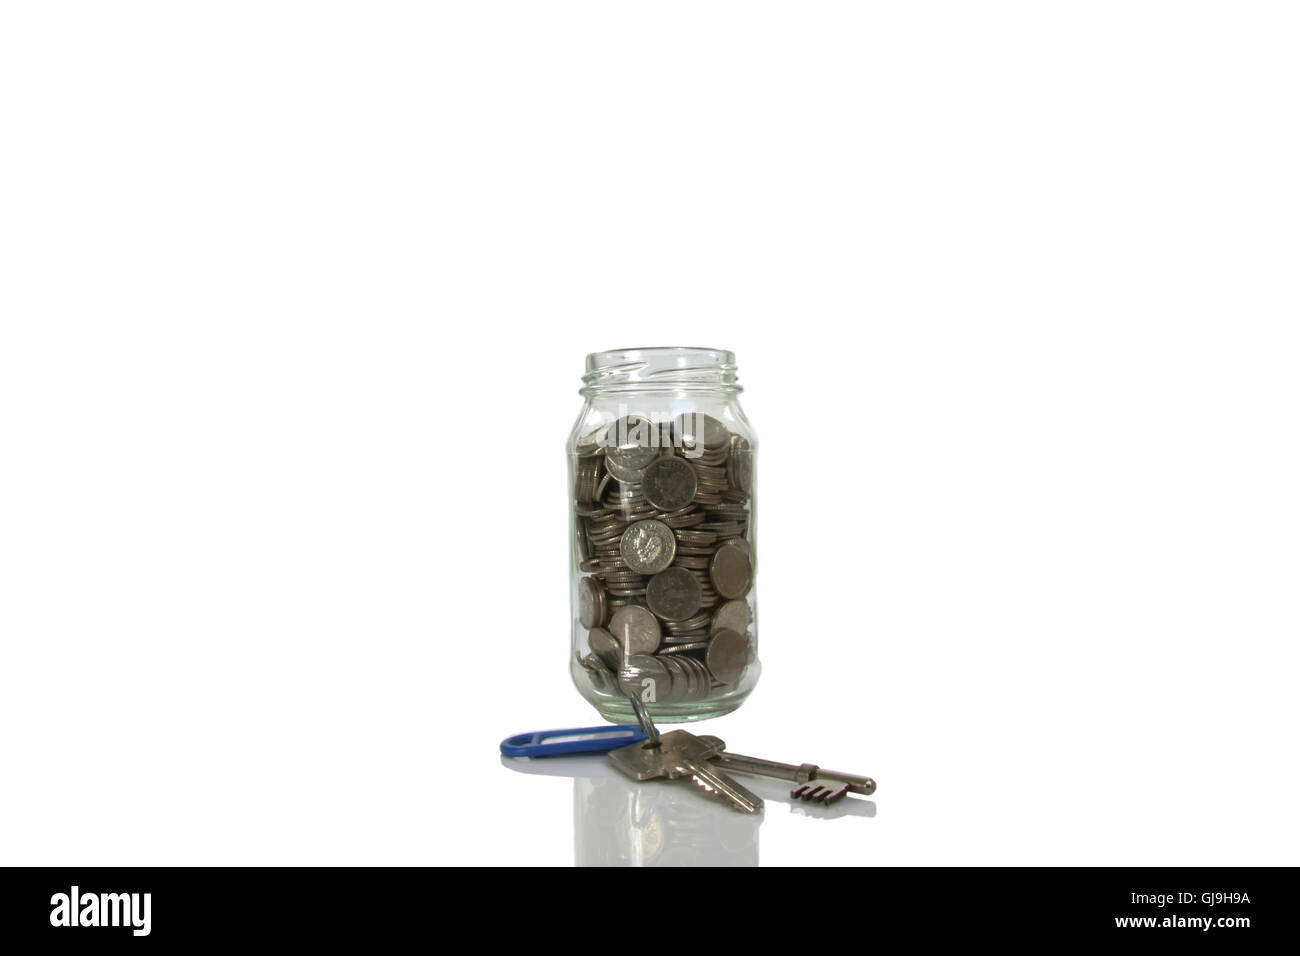 House deposit keys and money Stock Photo